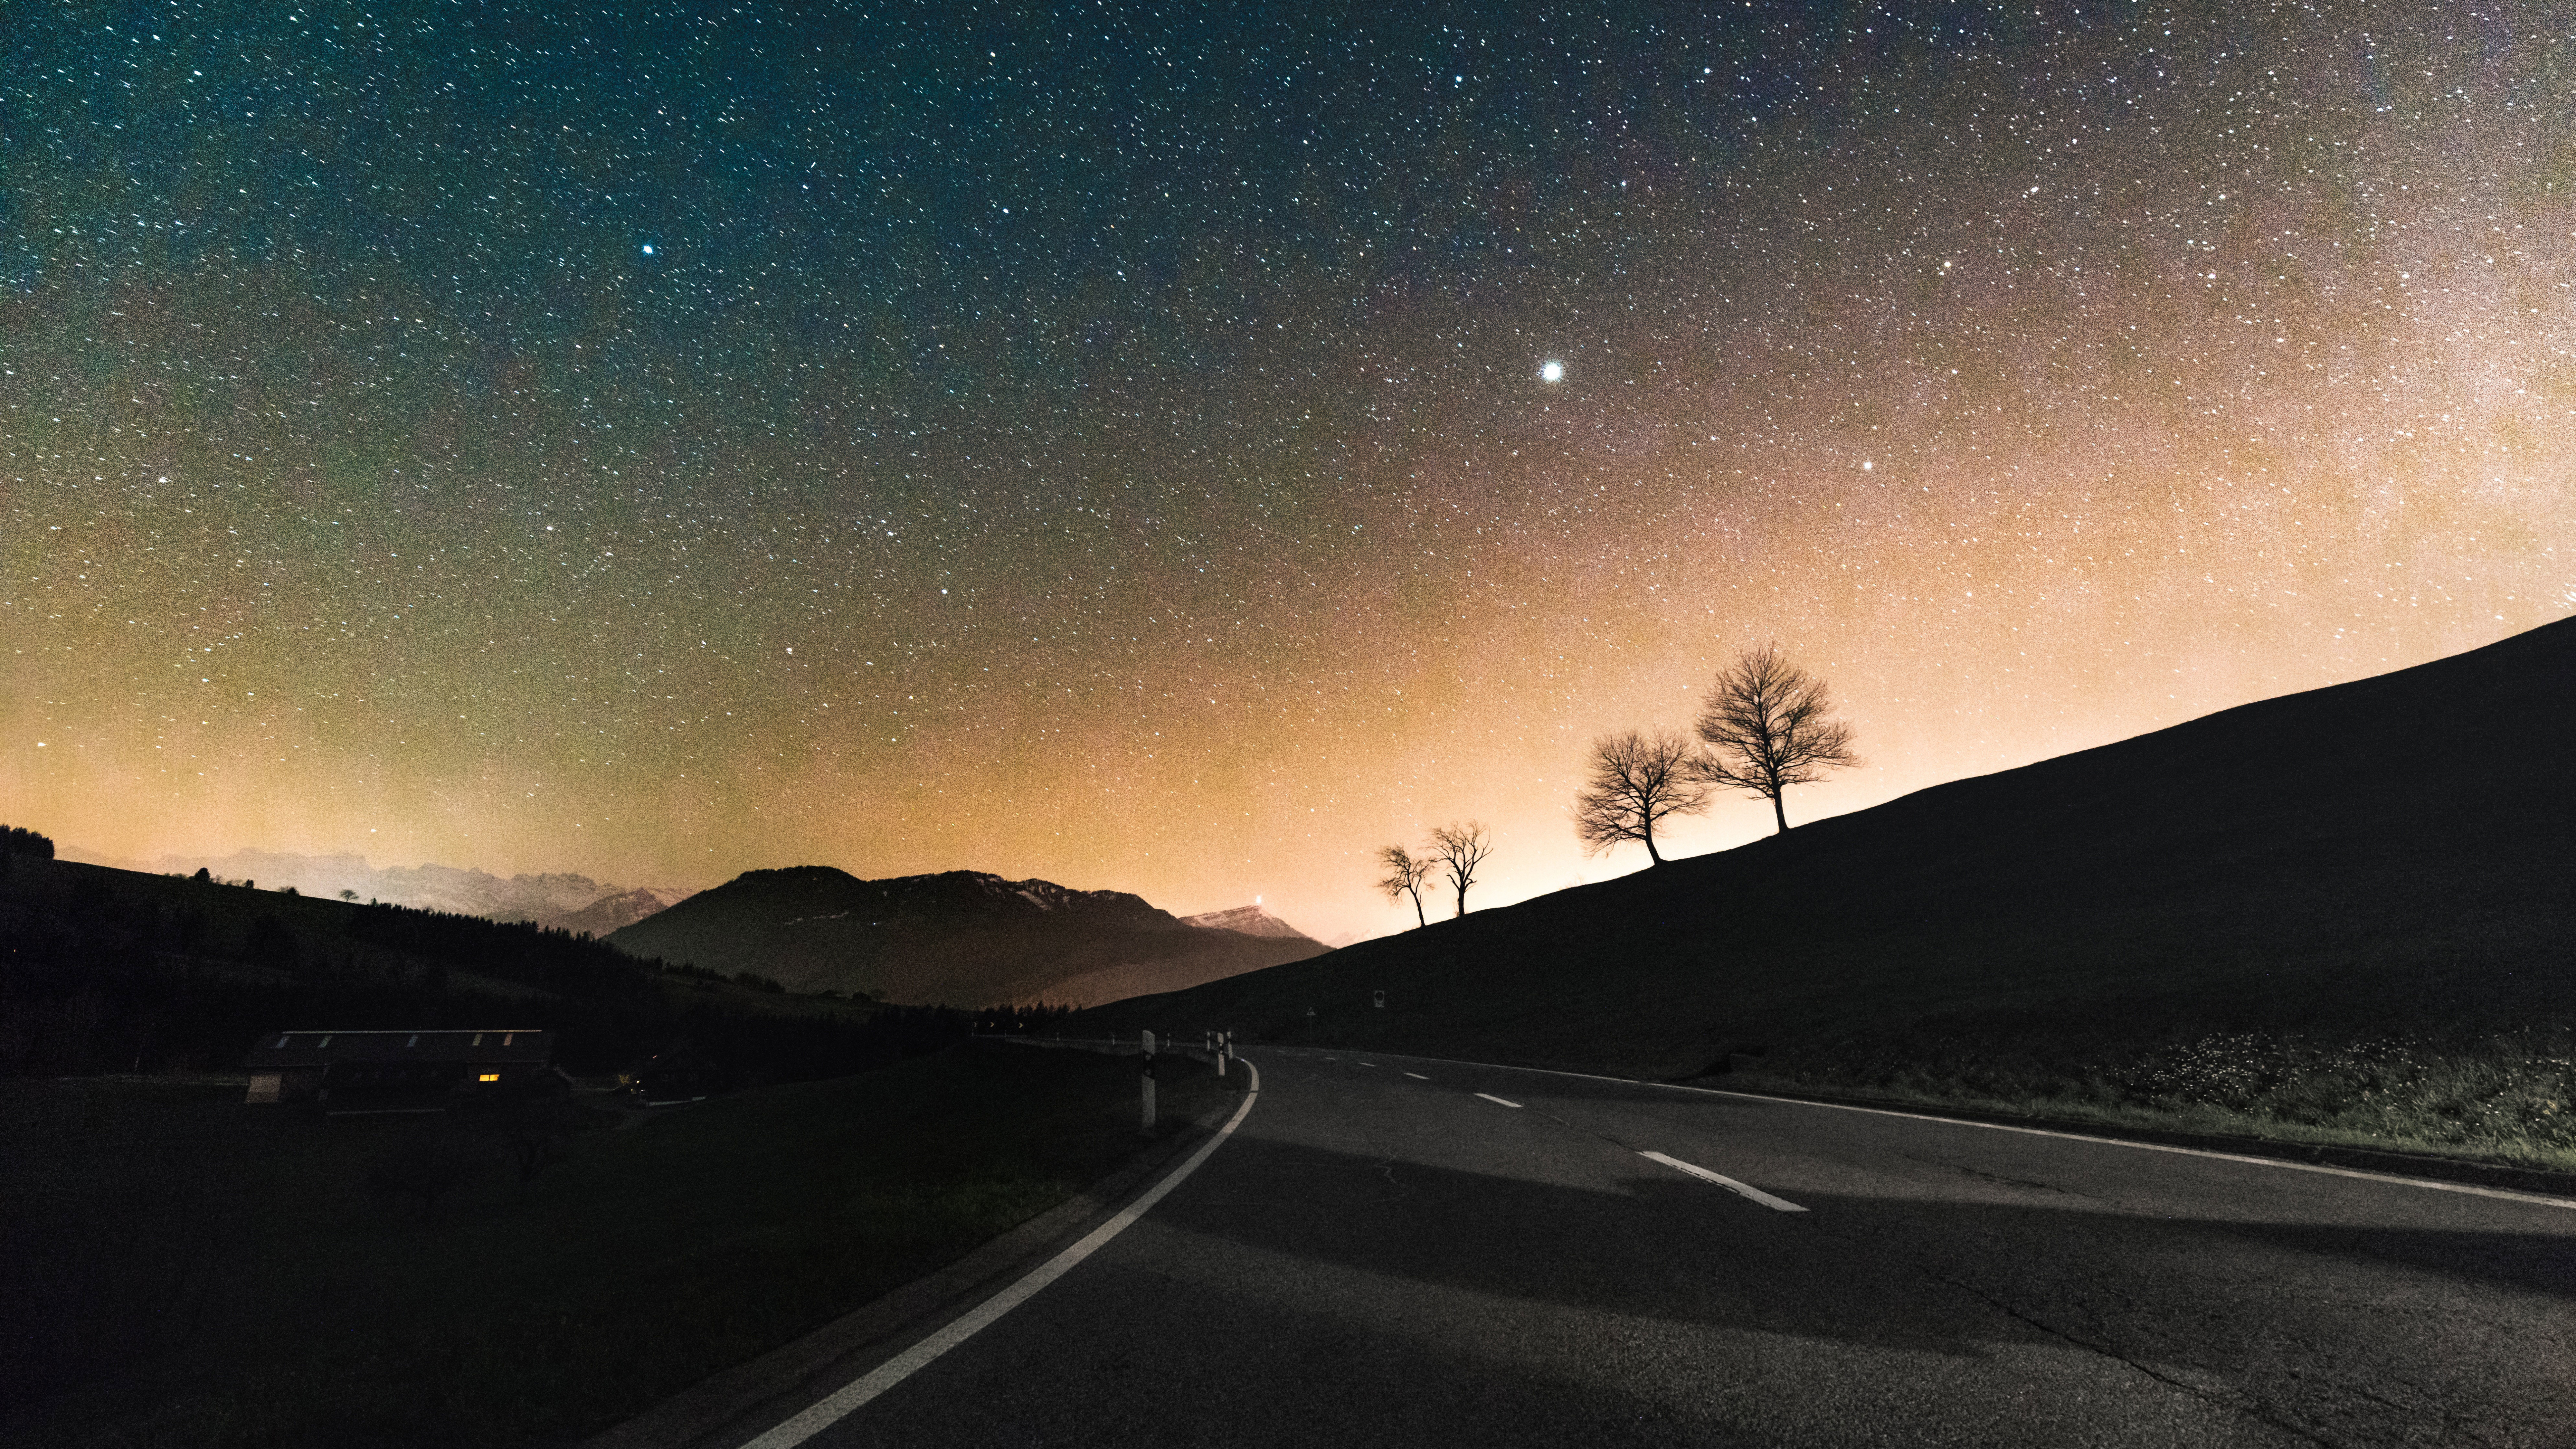 Sky Full Of Stars On A Road Hd - HD Wallpaper 